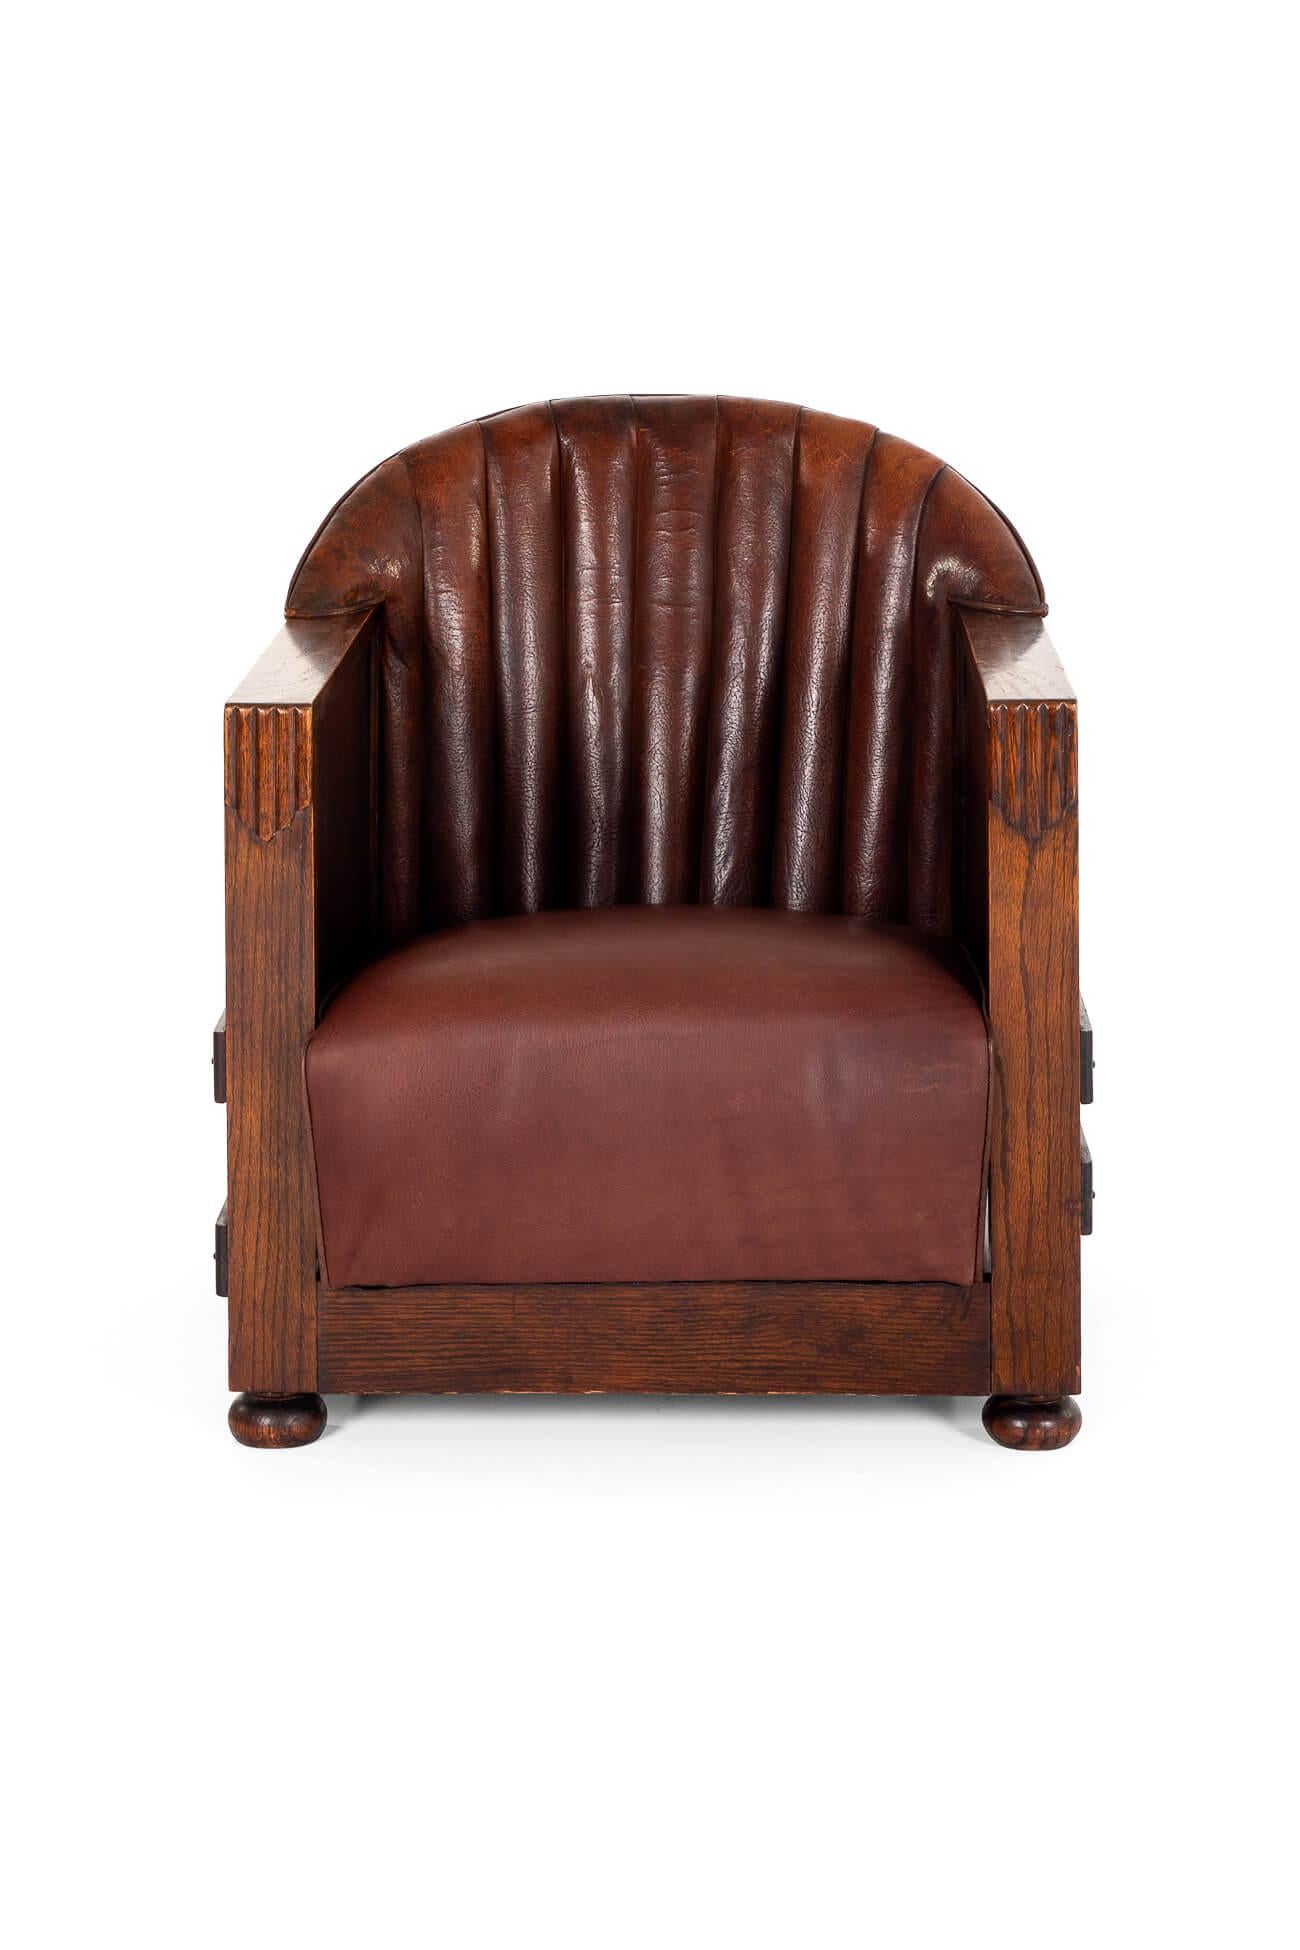 British Art Deco Club Chair For Sale